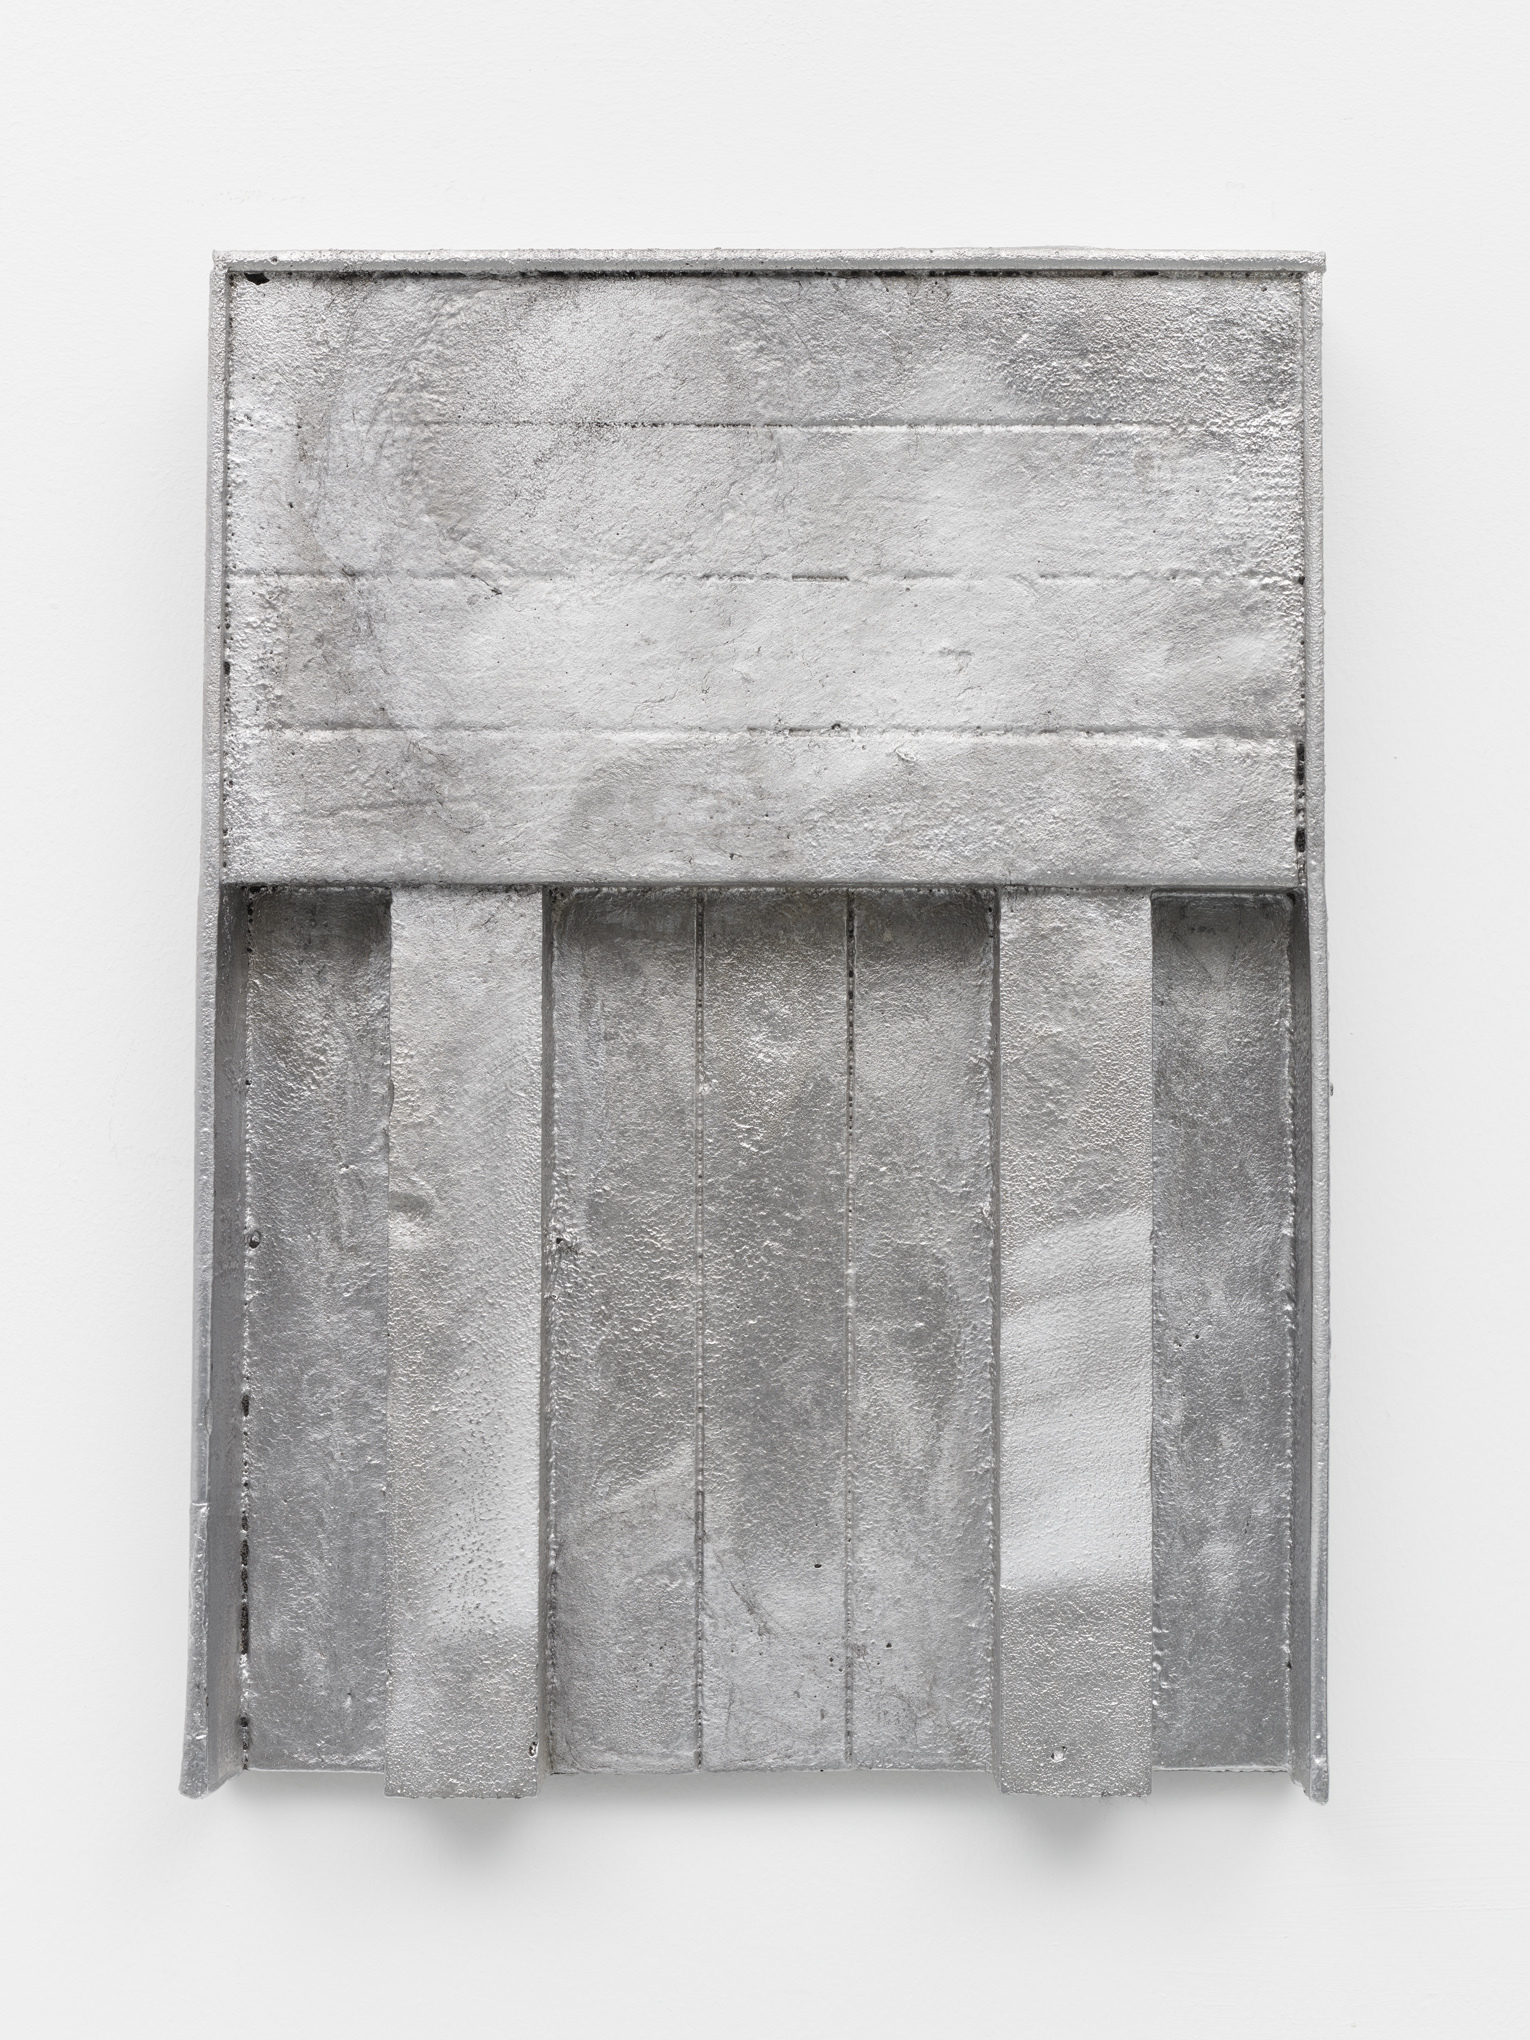 Jordan Derrien, Between the clods of spaded earth, 2022, cast aluminium, 23x32cm